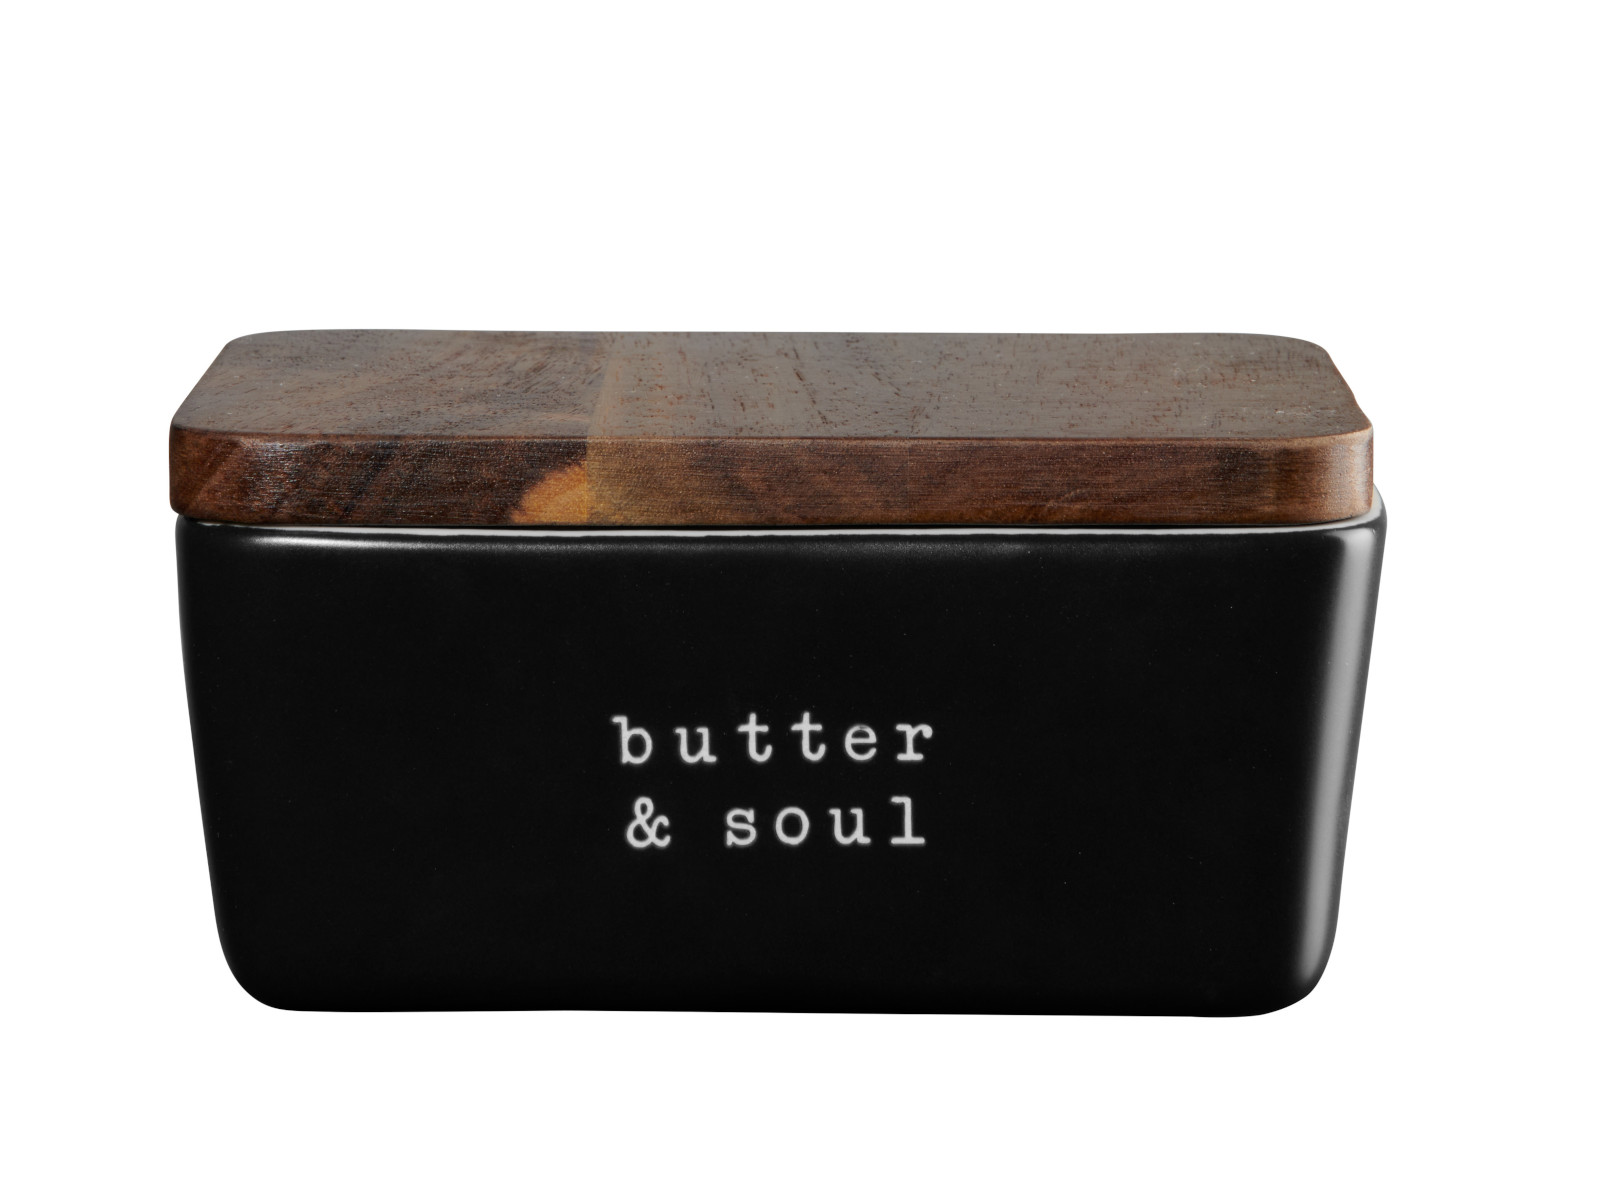 ASA Selection hey! Butterdose butter & soul schwarz 15x10x7,8cm